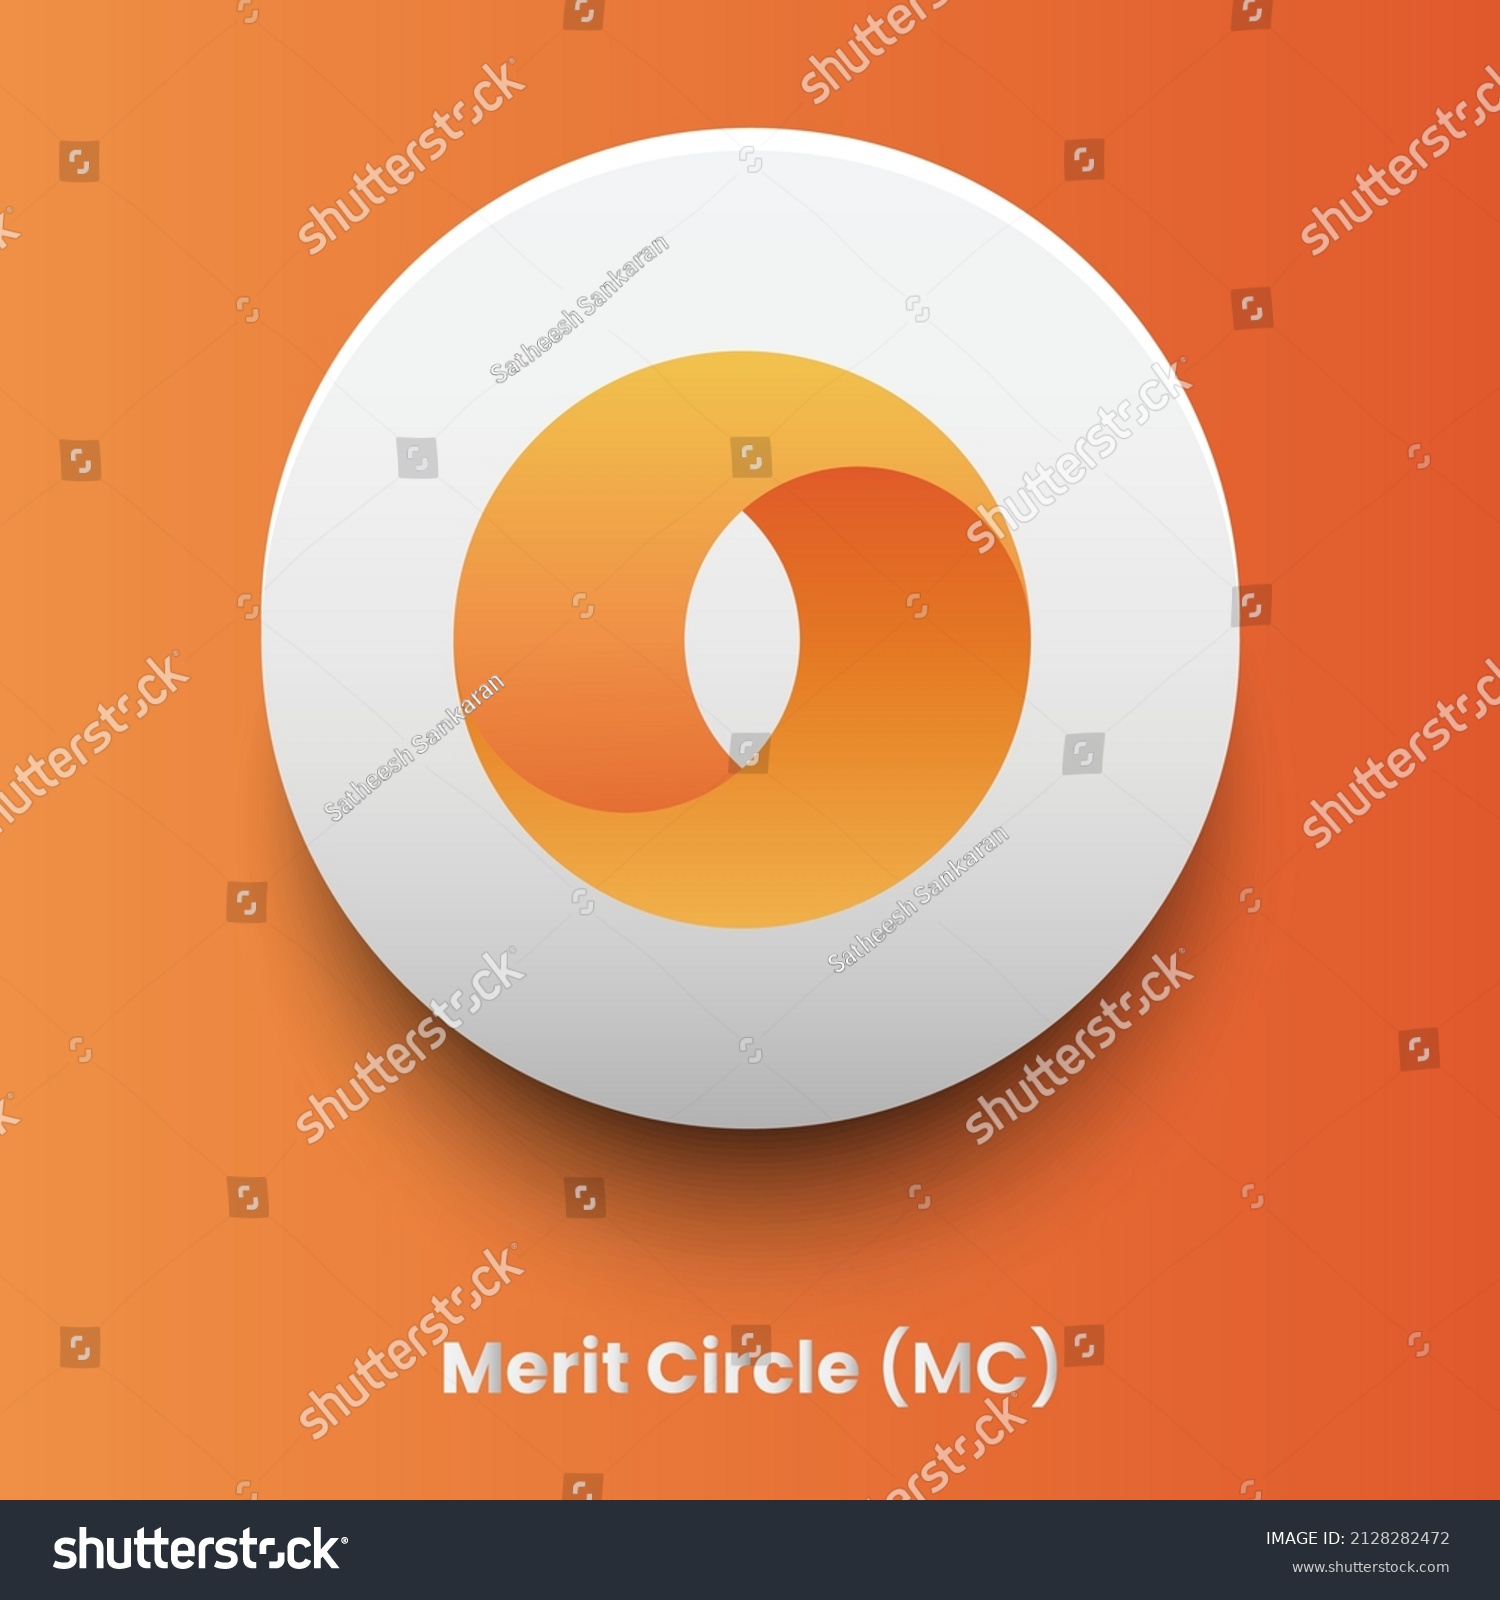 merit circle crypto